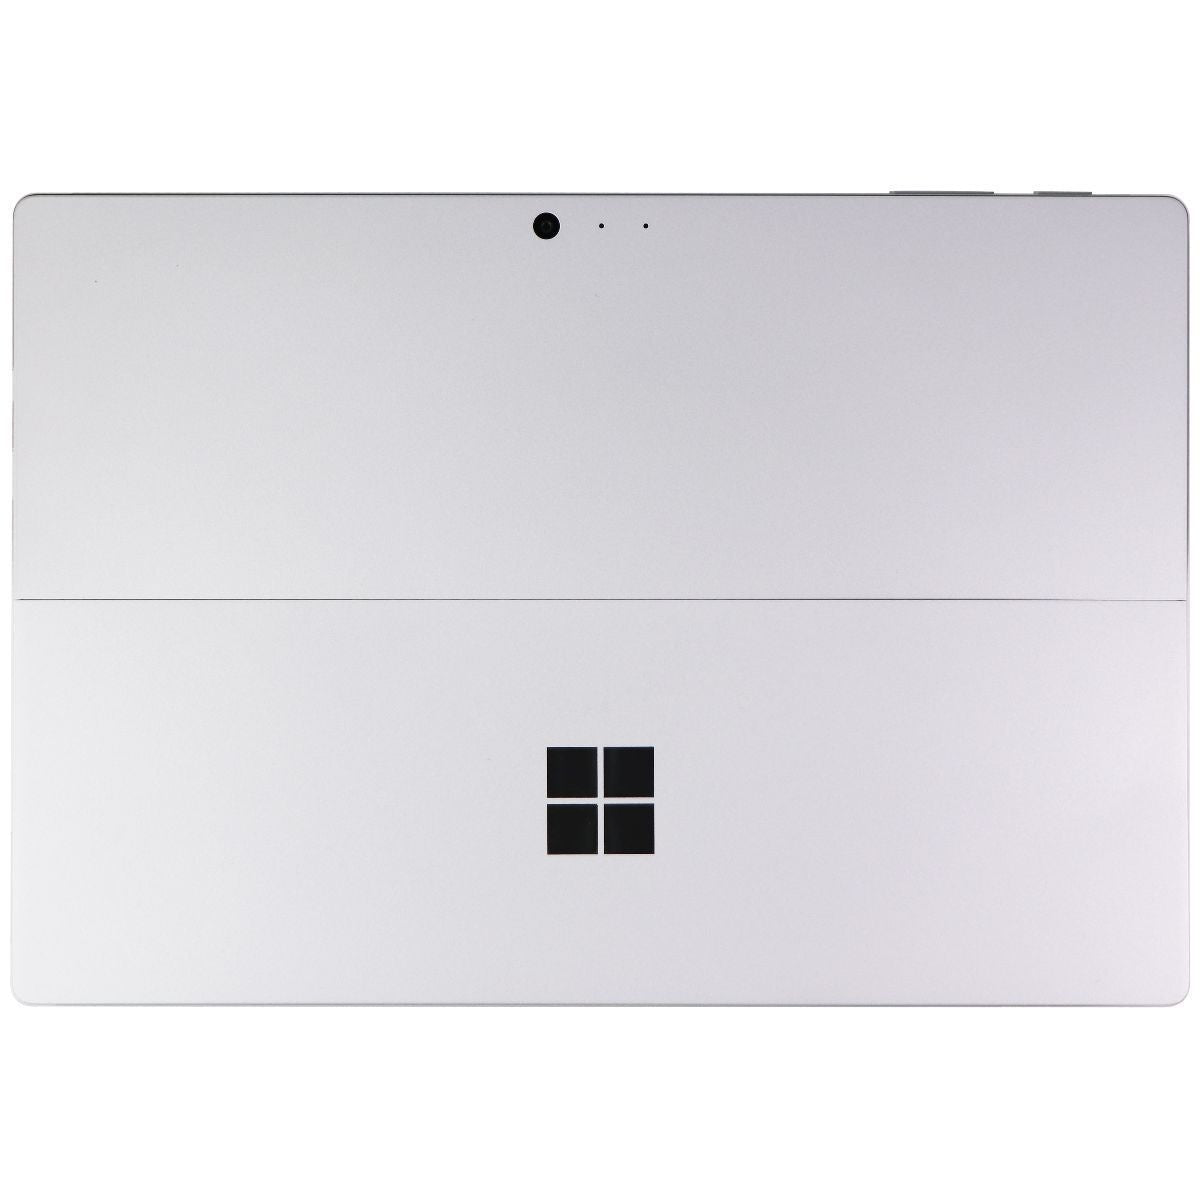 Microsoft Surface Pro (5th Gen, 1796) Intel Core M 4GB RAM / 128GB (2017 Model) iPads, Tablets & eBook Readers Microsoft    - Simple Cell Bulk Wholesale Pricing - USA Seller